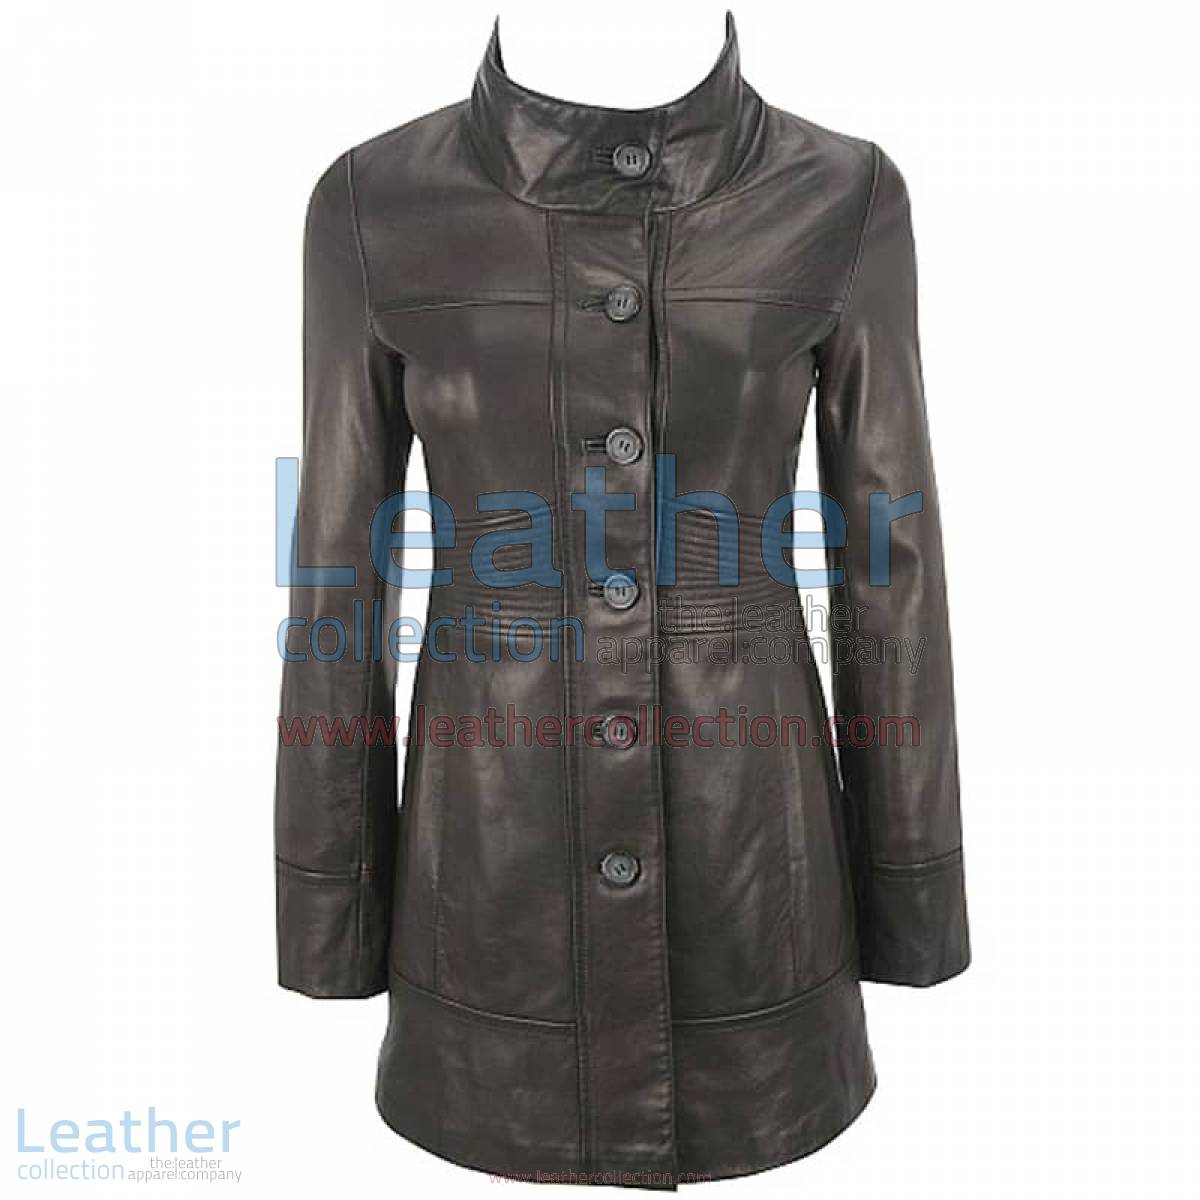 Ladies 3/4 Length Coat With Trapunto Stitched Waist | ladies coat